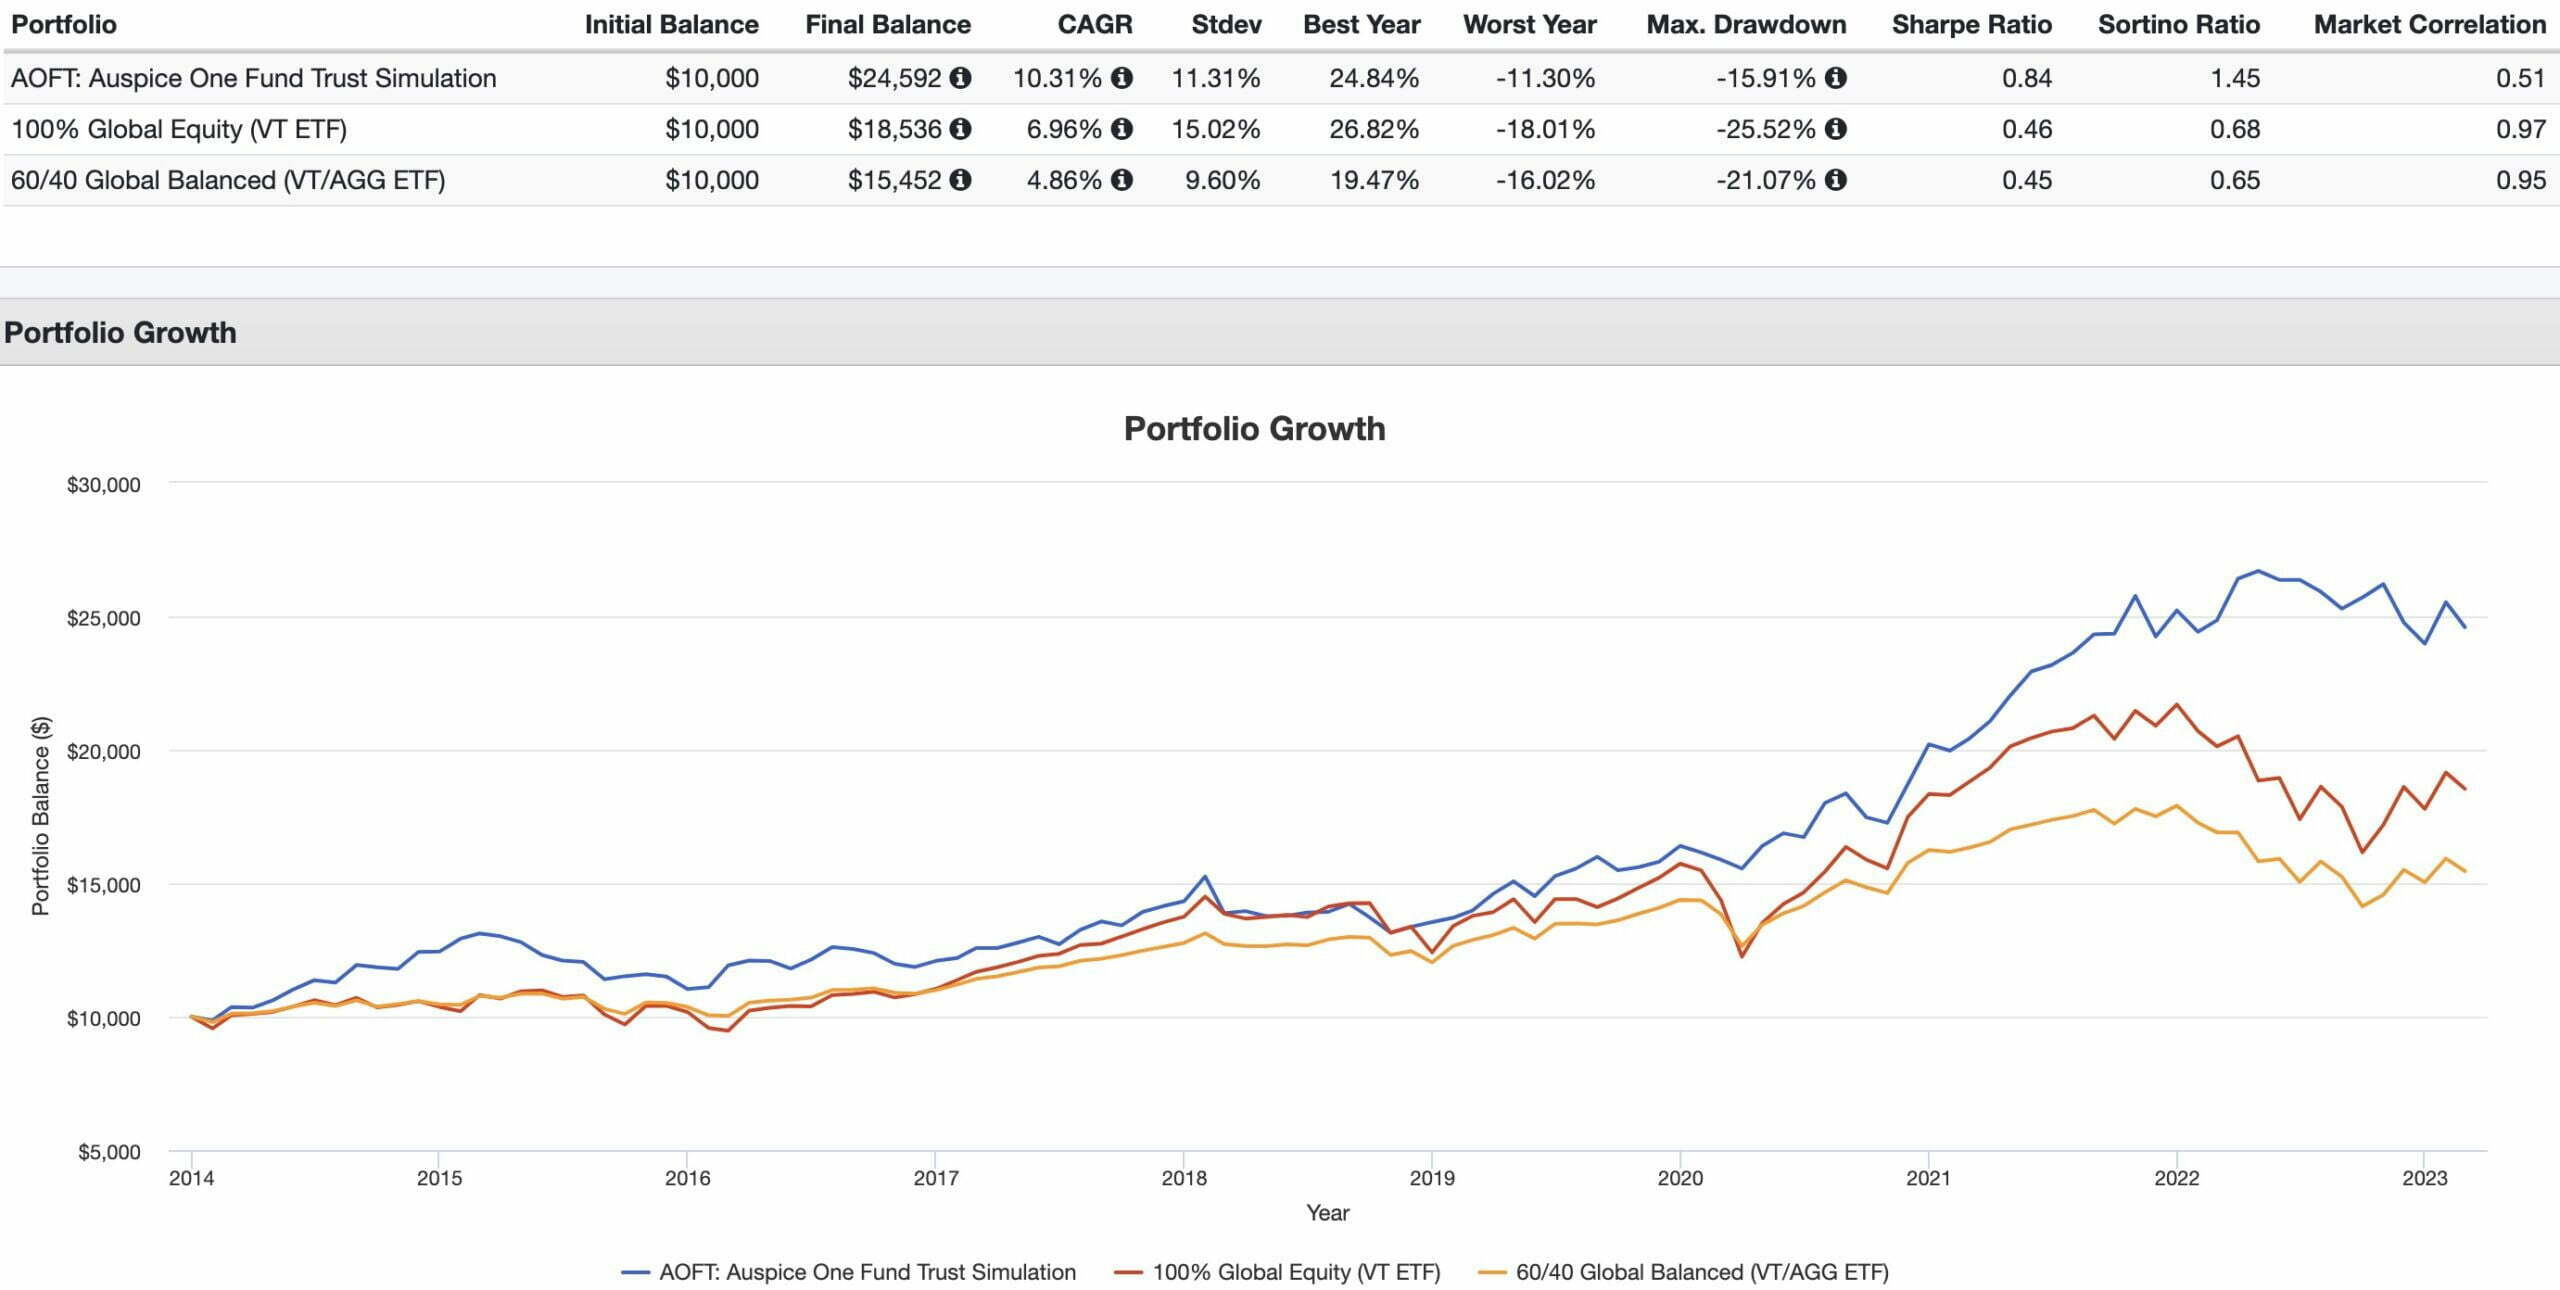 AOFT Auspice One Fund Trust vs 100% Global Equity vs 60/40 Portfolio Performance Summary Simulation 